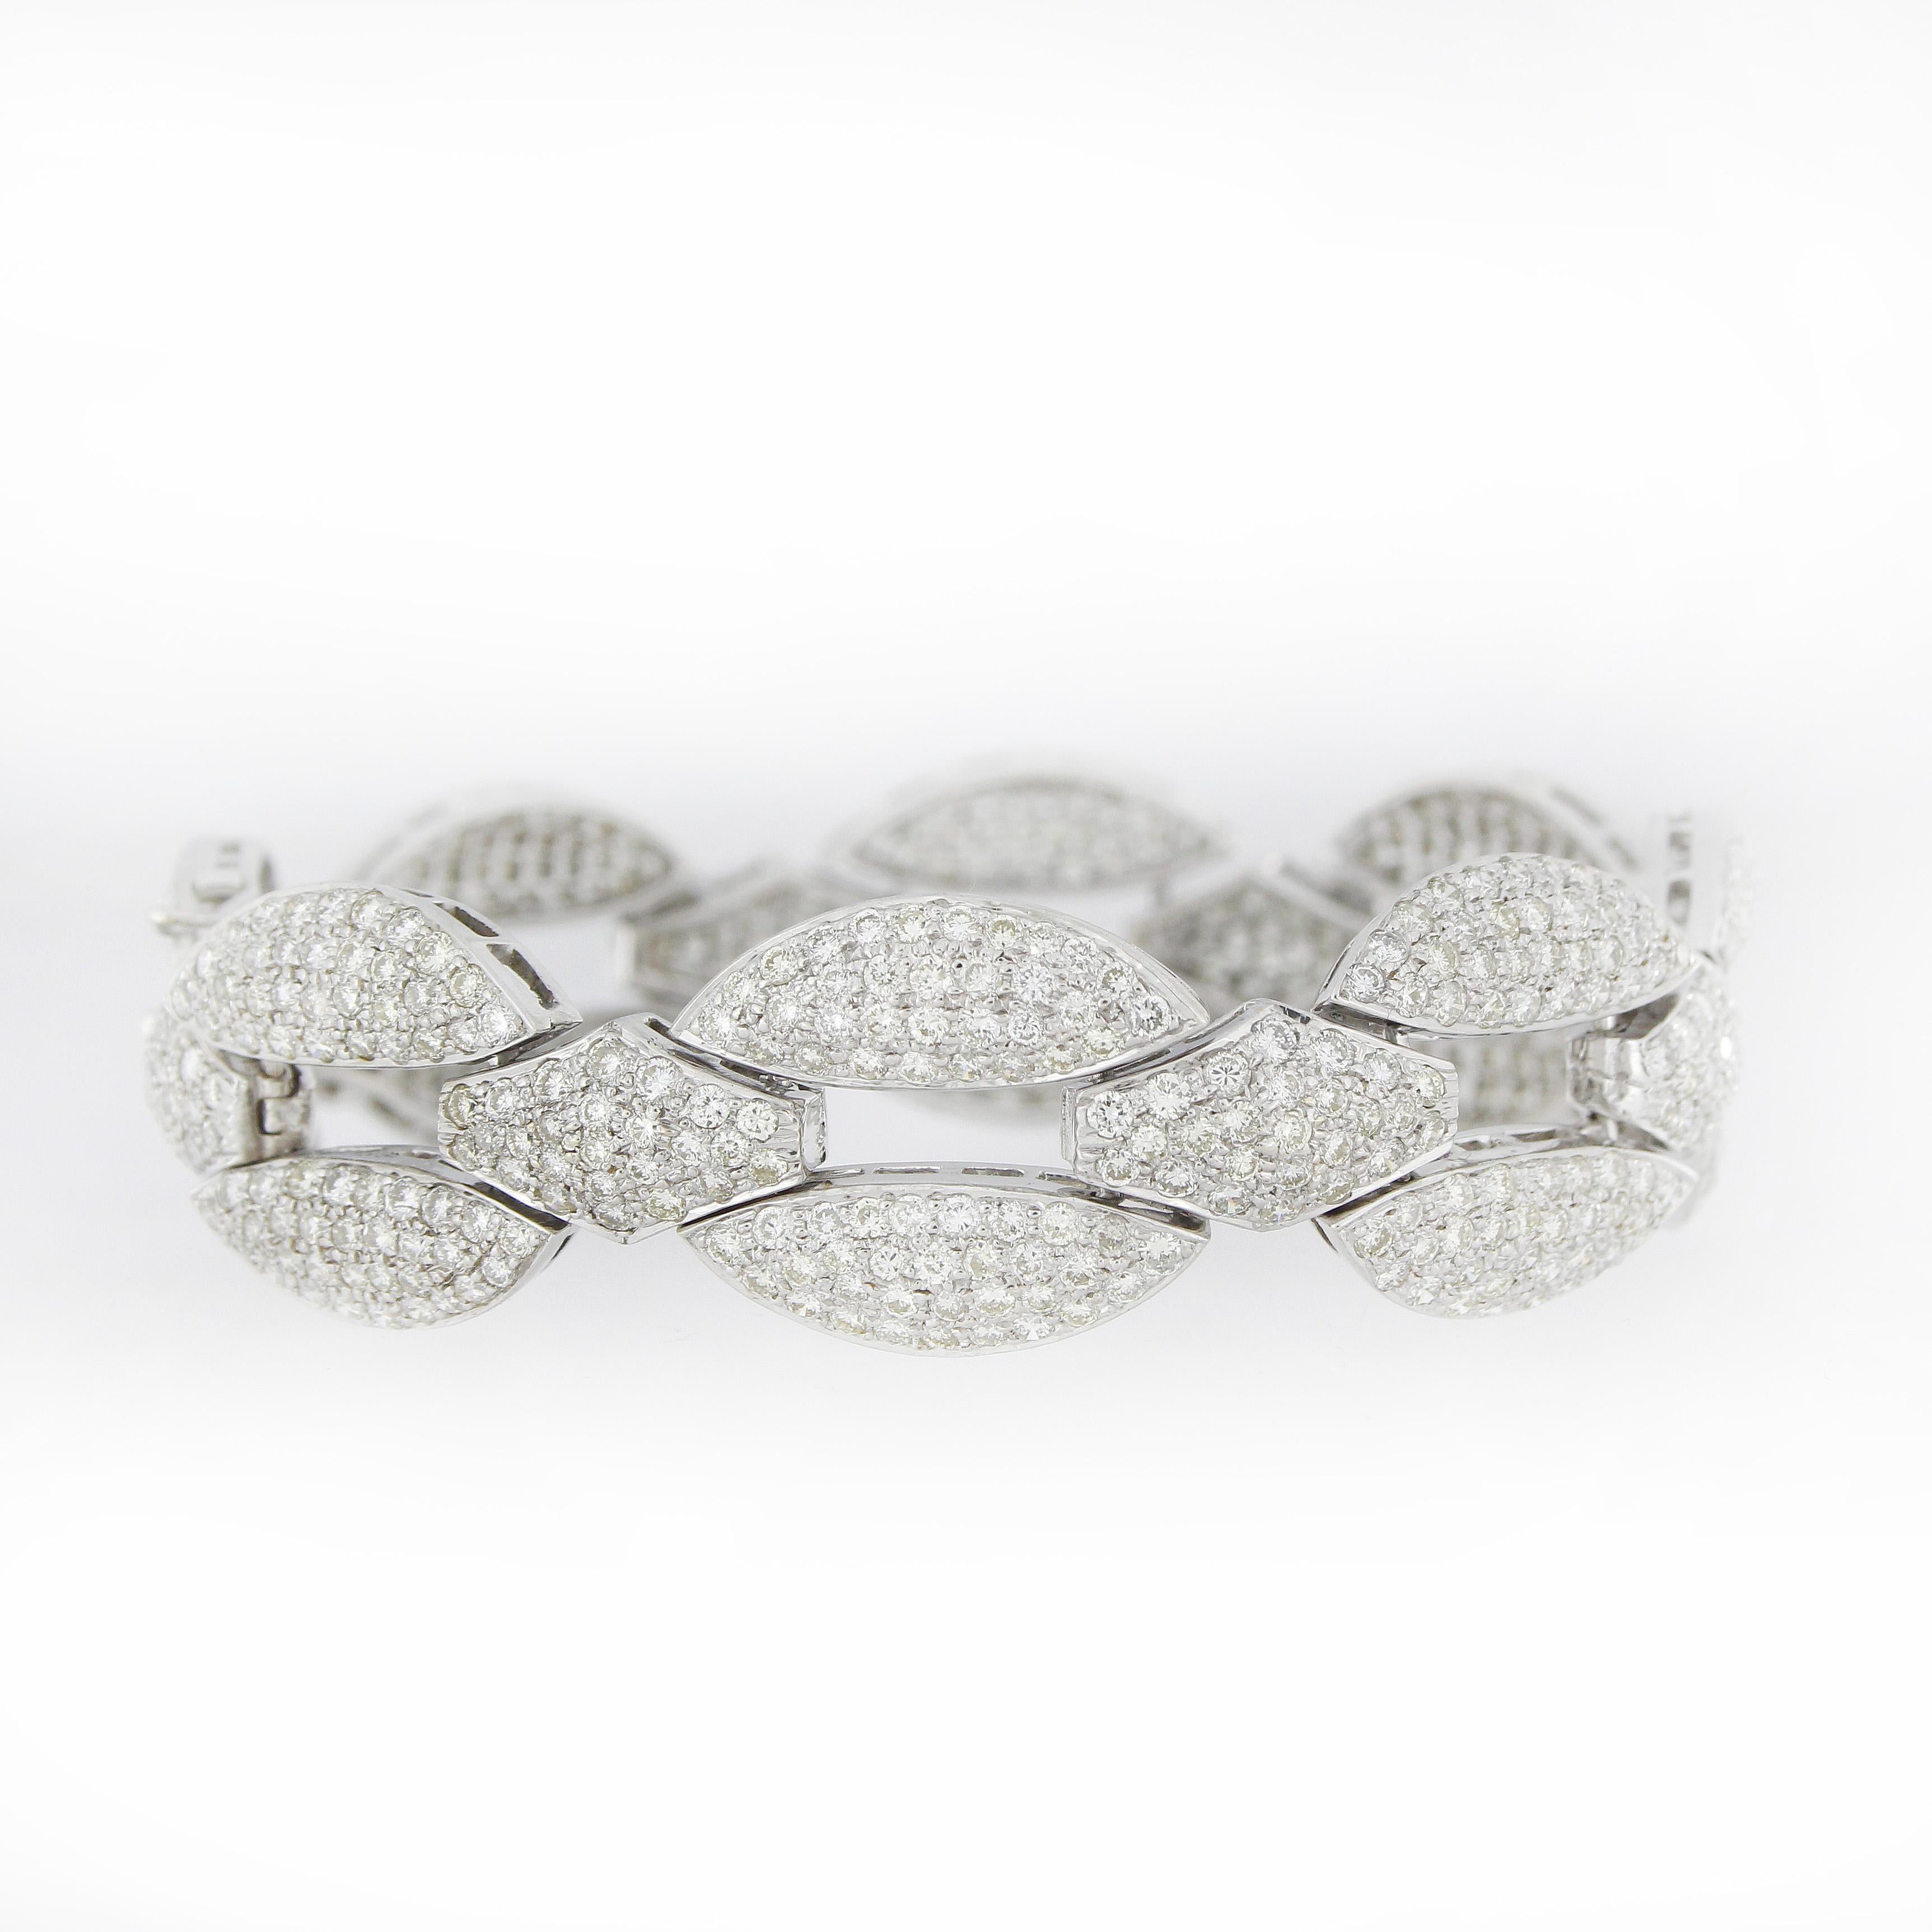 34.6 ct. Diamond Bracelet & Necklace White Gold Jewelry Set For Sale 1